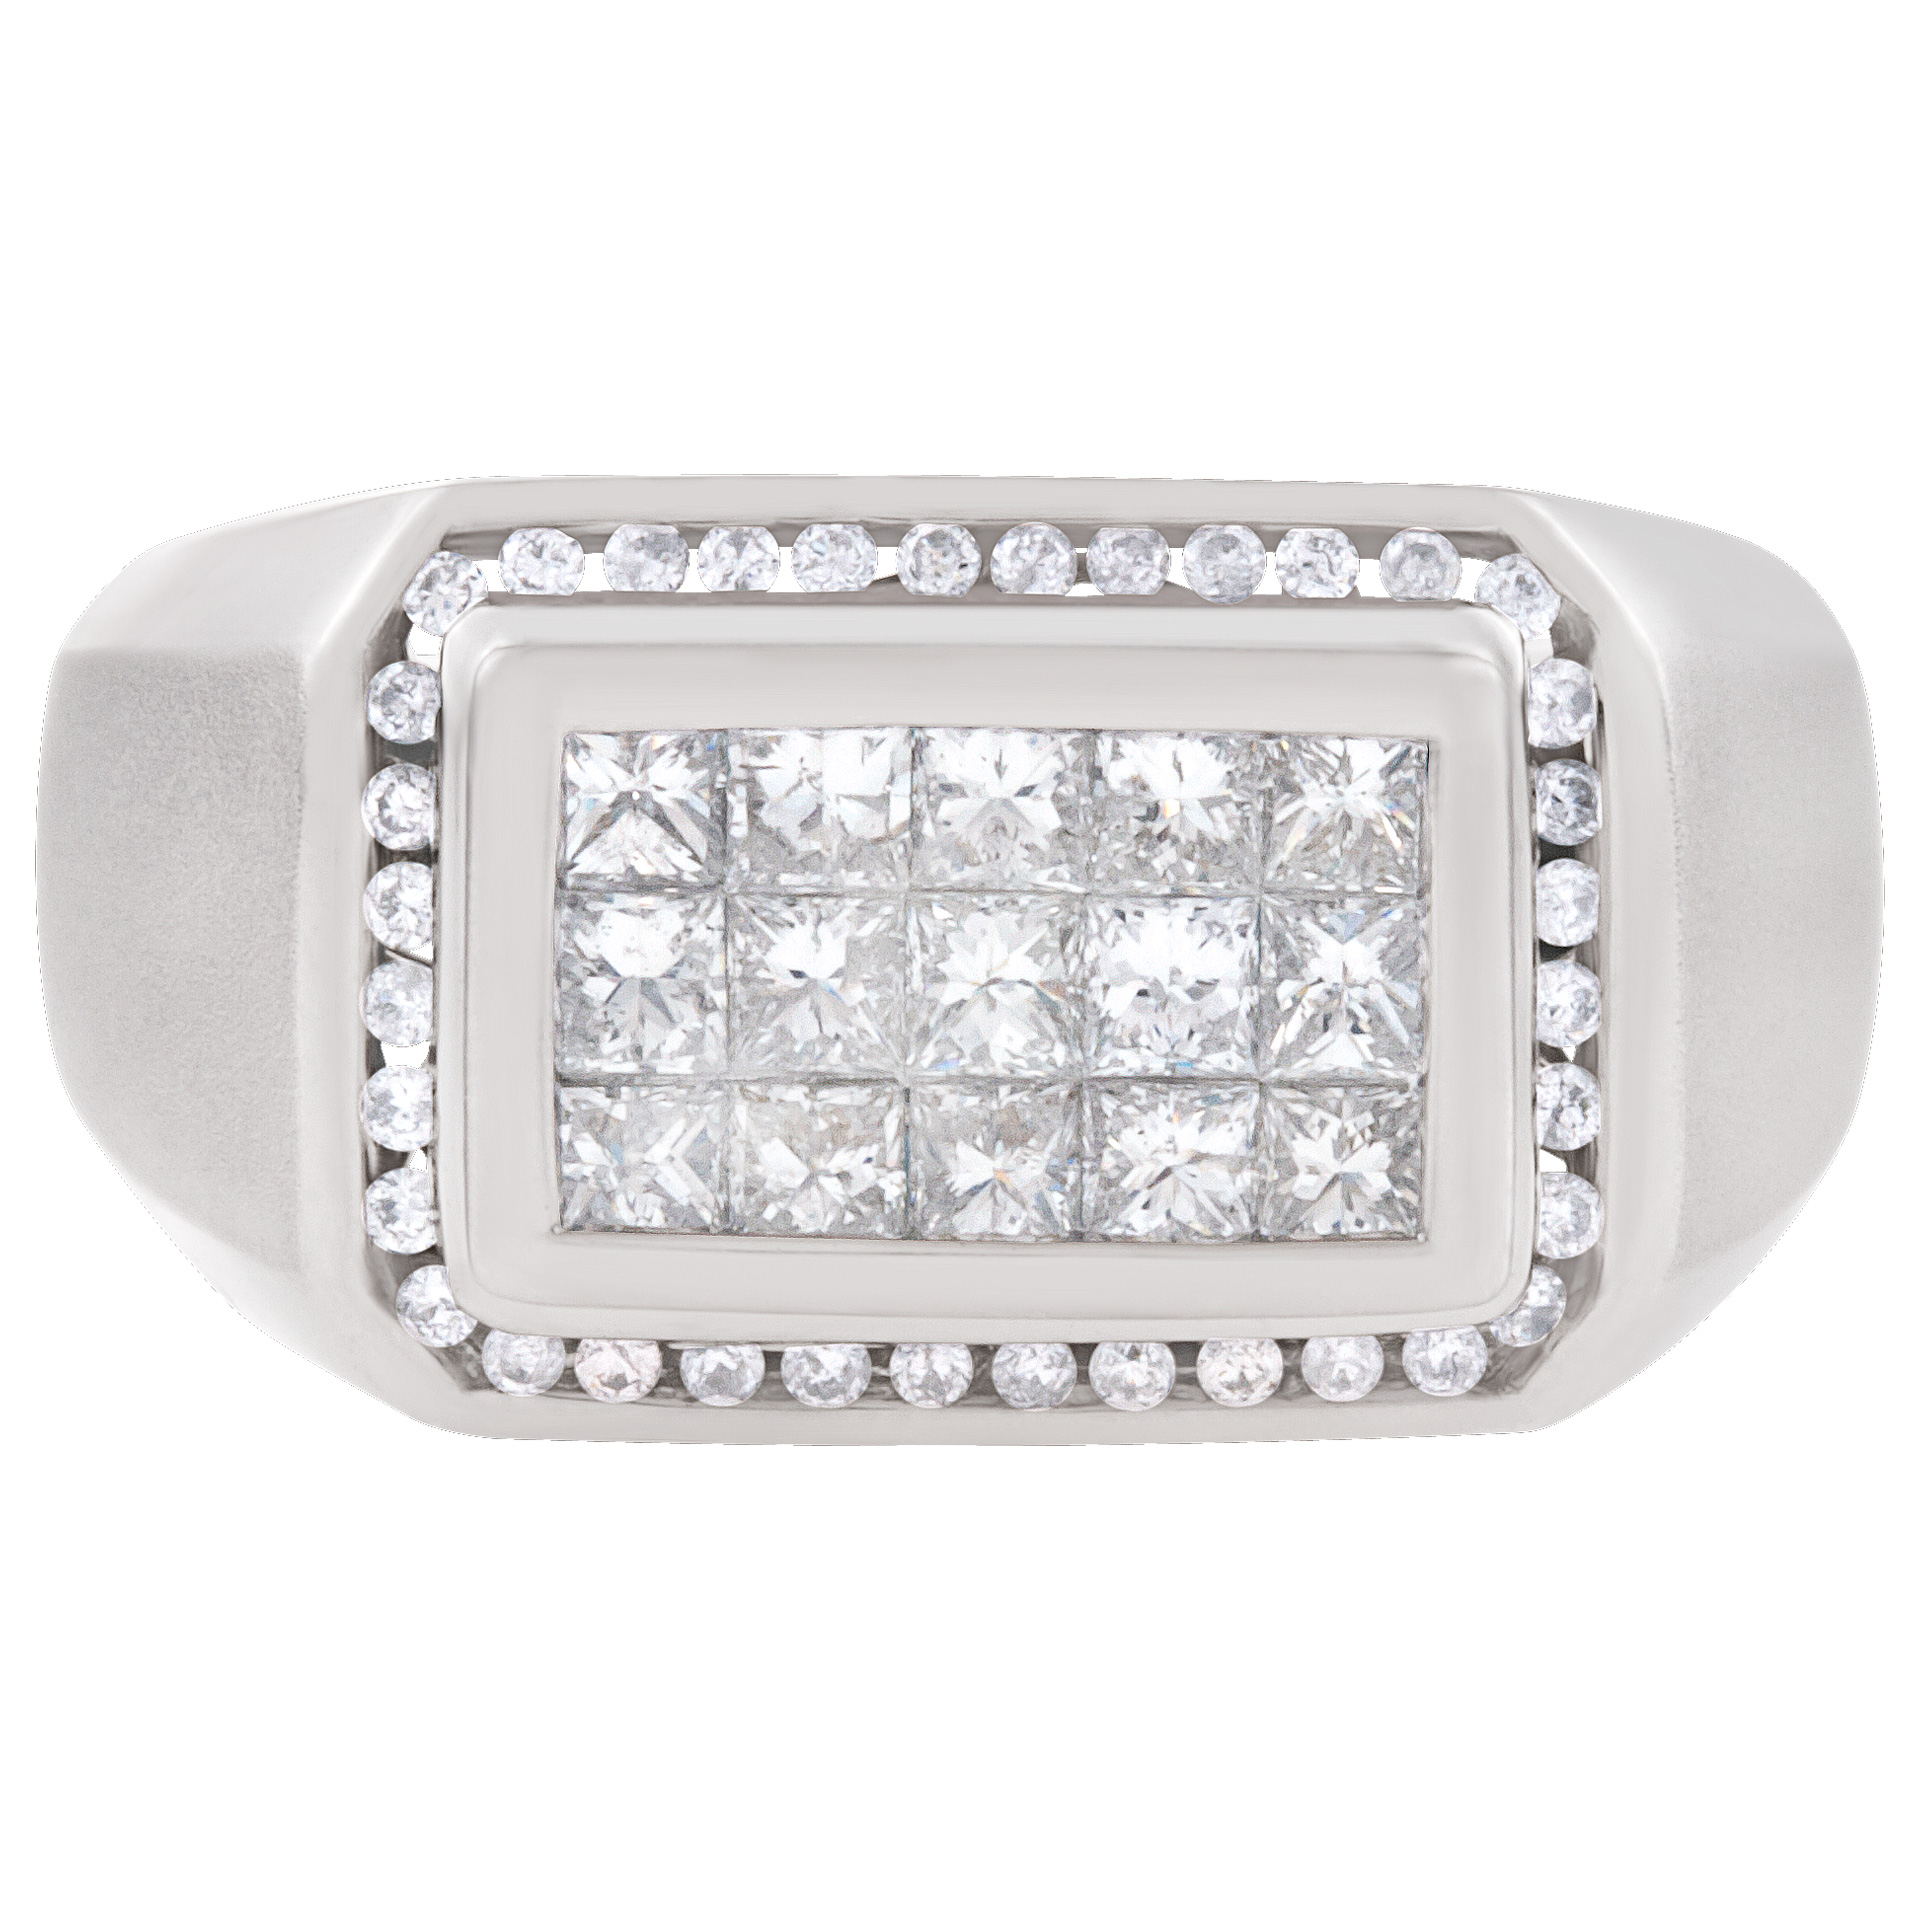 Diamond ring in 18k white gold. 1.51 carats in princess cut & round diamonds